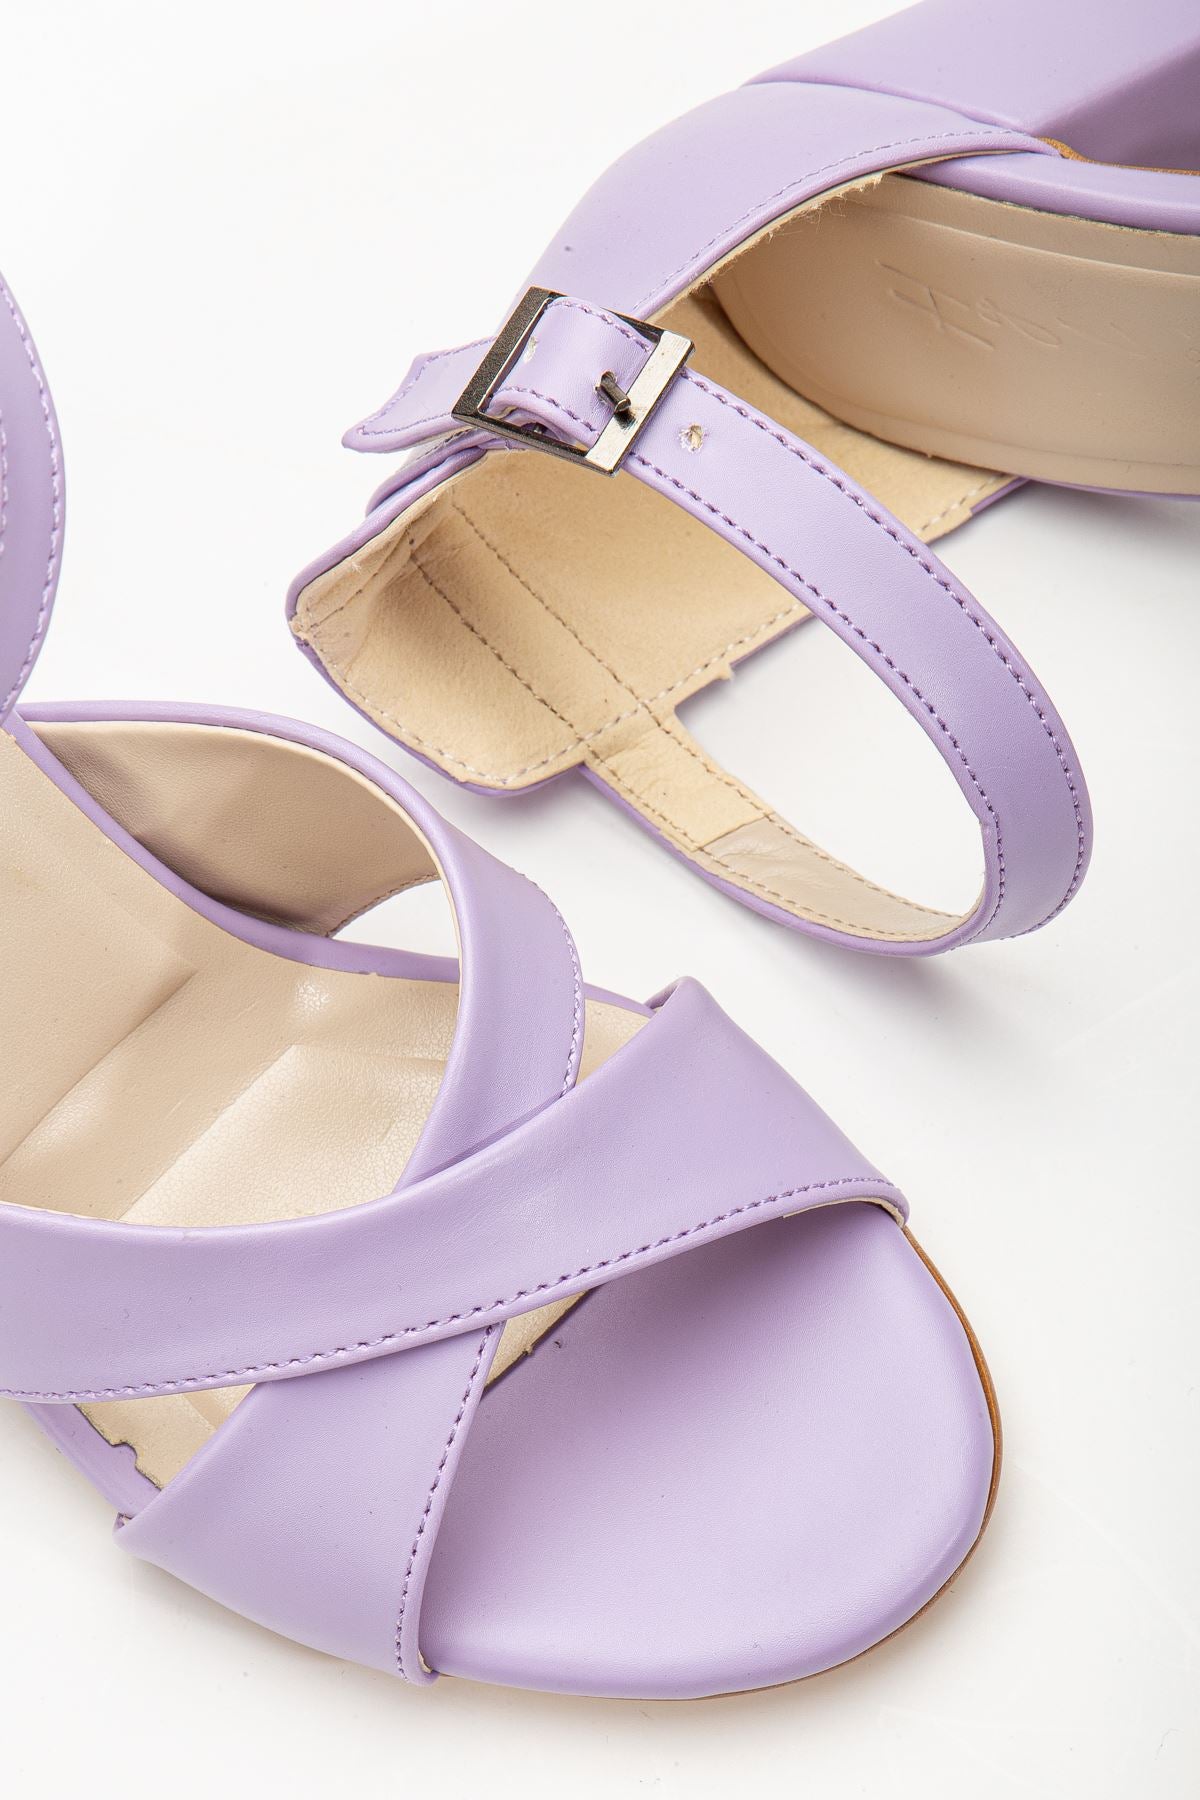 Jany Lilac Skin High Heeled Women's Shoes - STREETMODE ™